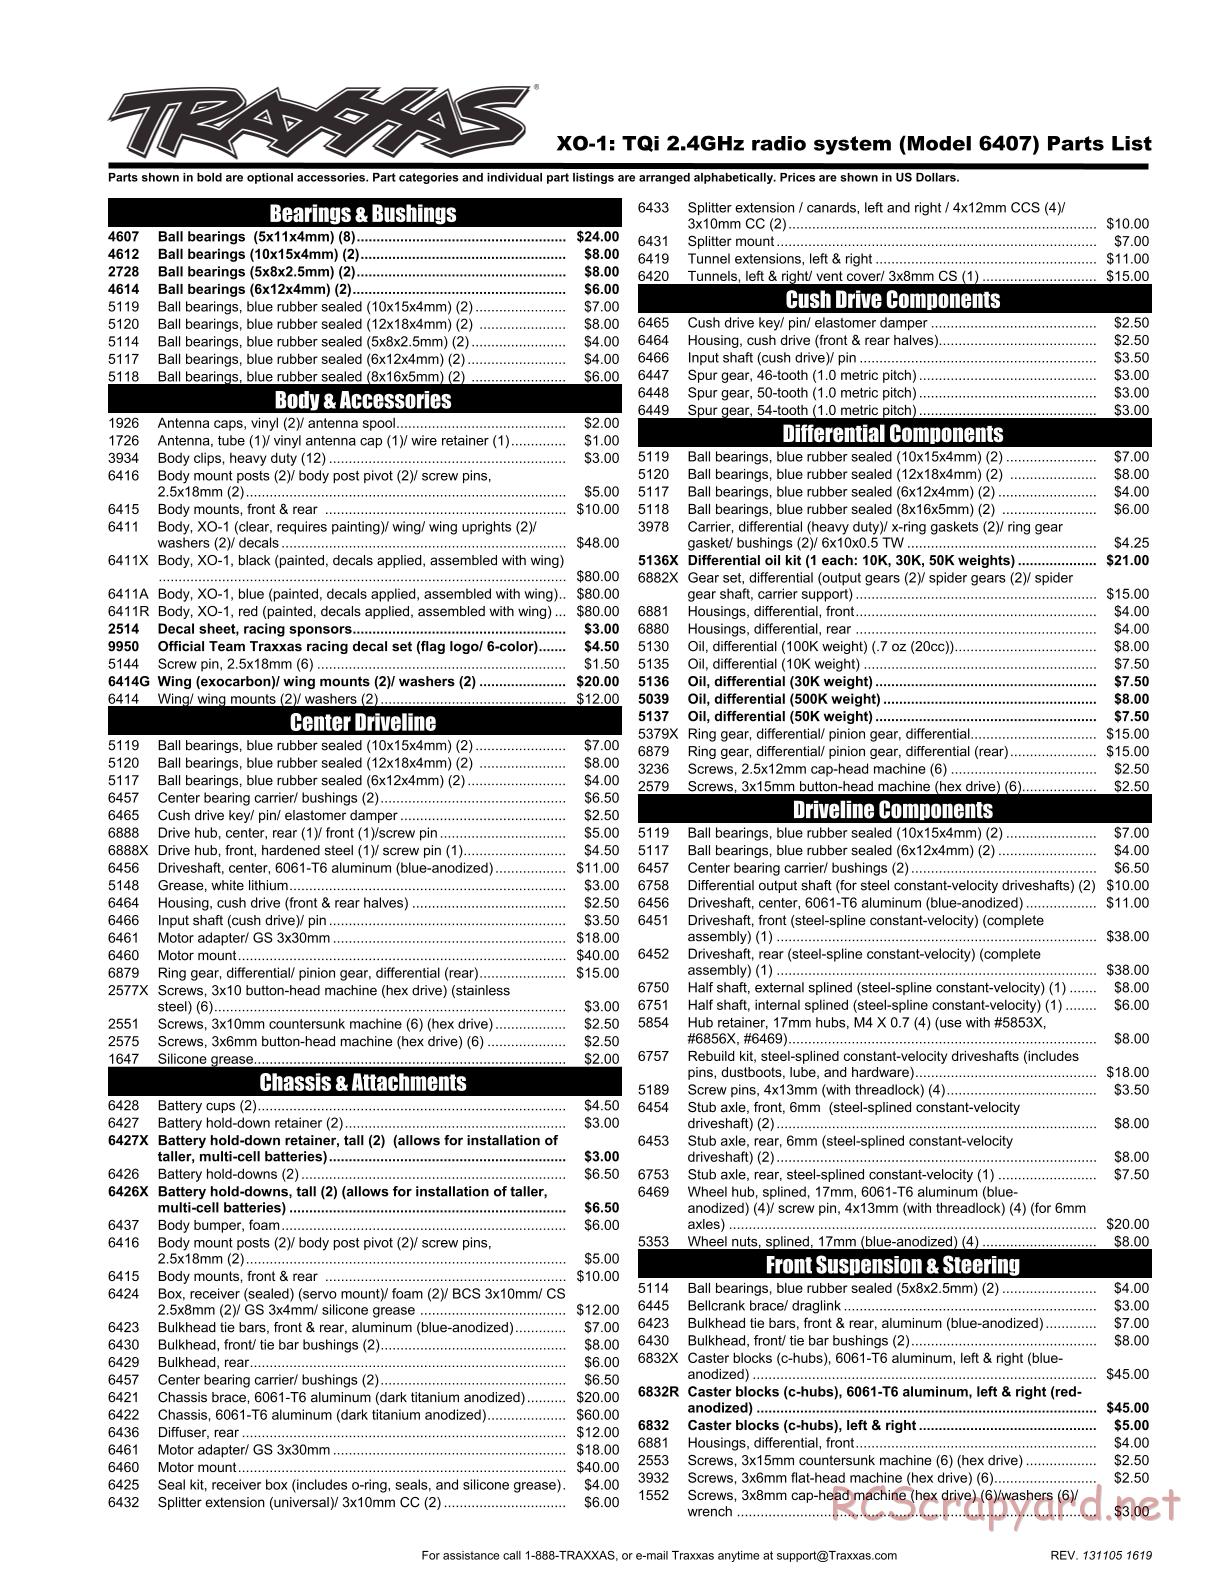 Traxxas - XO-1 (2011) - Parts List - Page 1